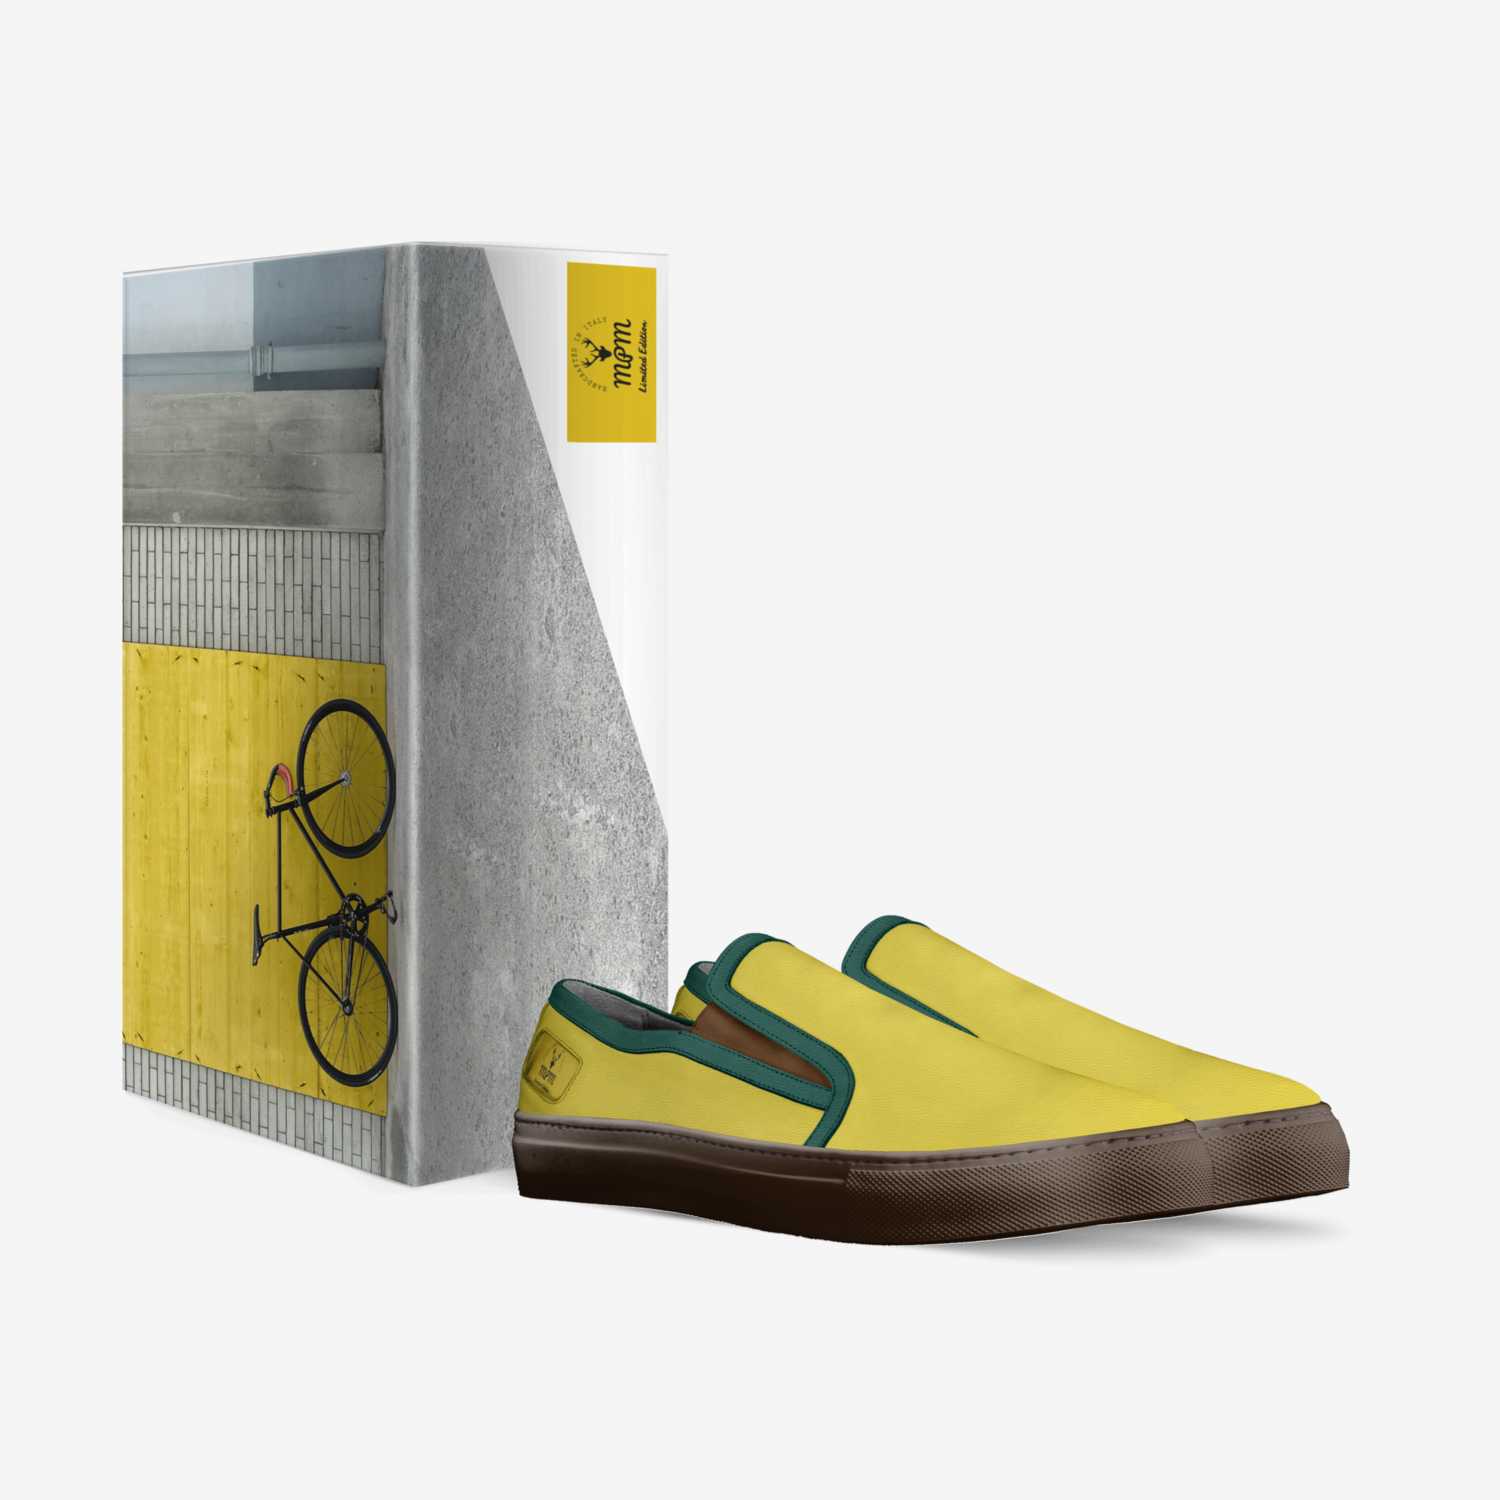 MPM custom made in Italy shoes by Kara Bondietti | Box view